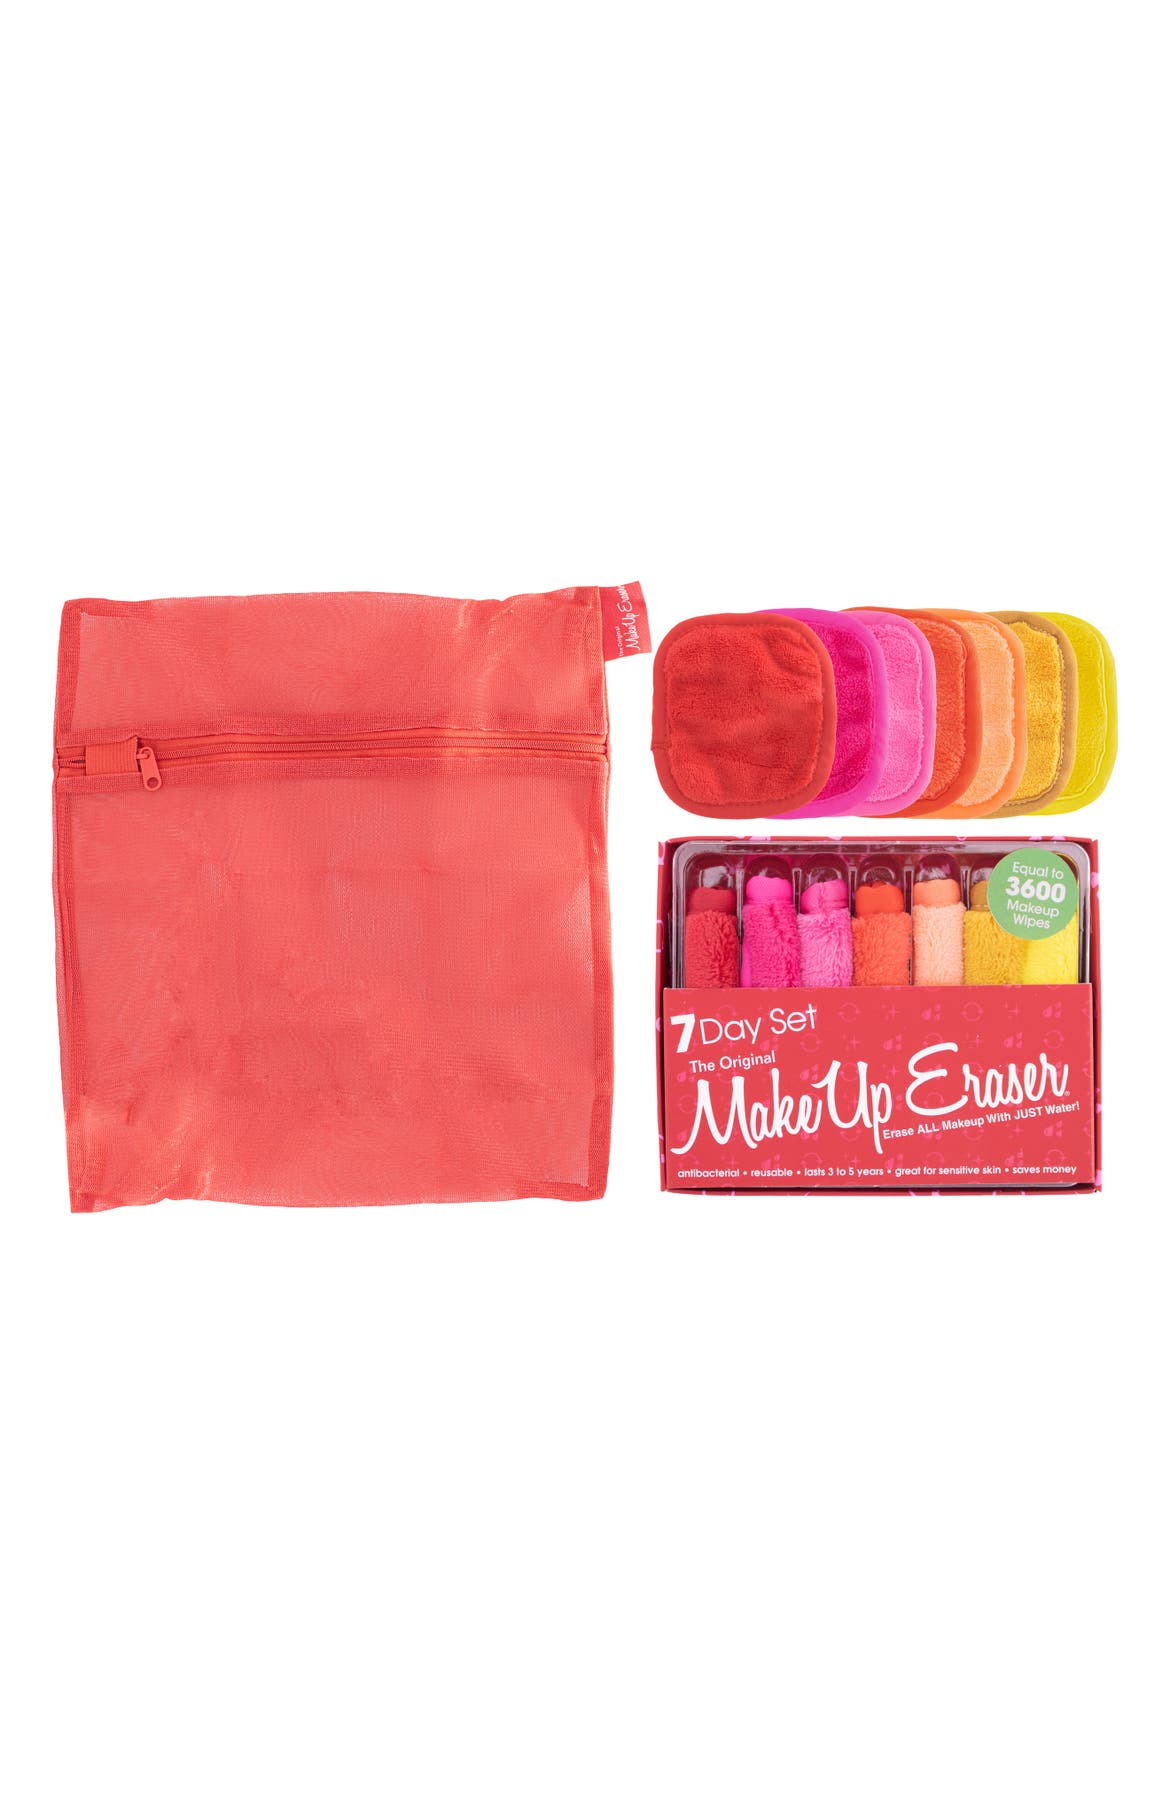 Makeup Eraser The Original Makeup Eraser Mini 7-Day Set (Nordstrom